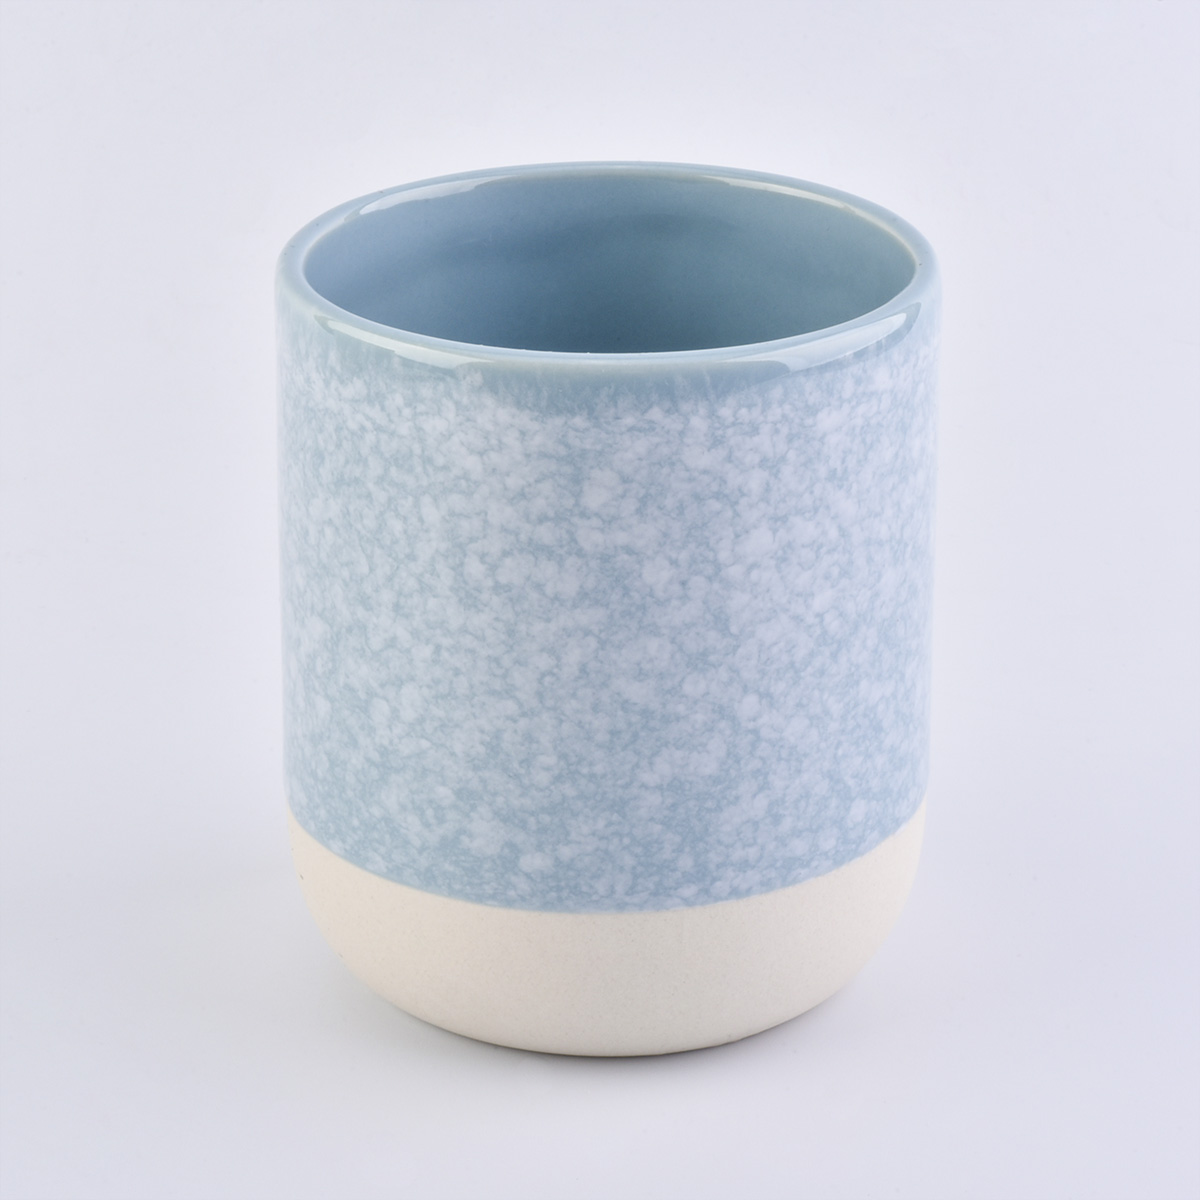 Buques de candea de cerámica personalizados